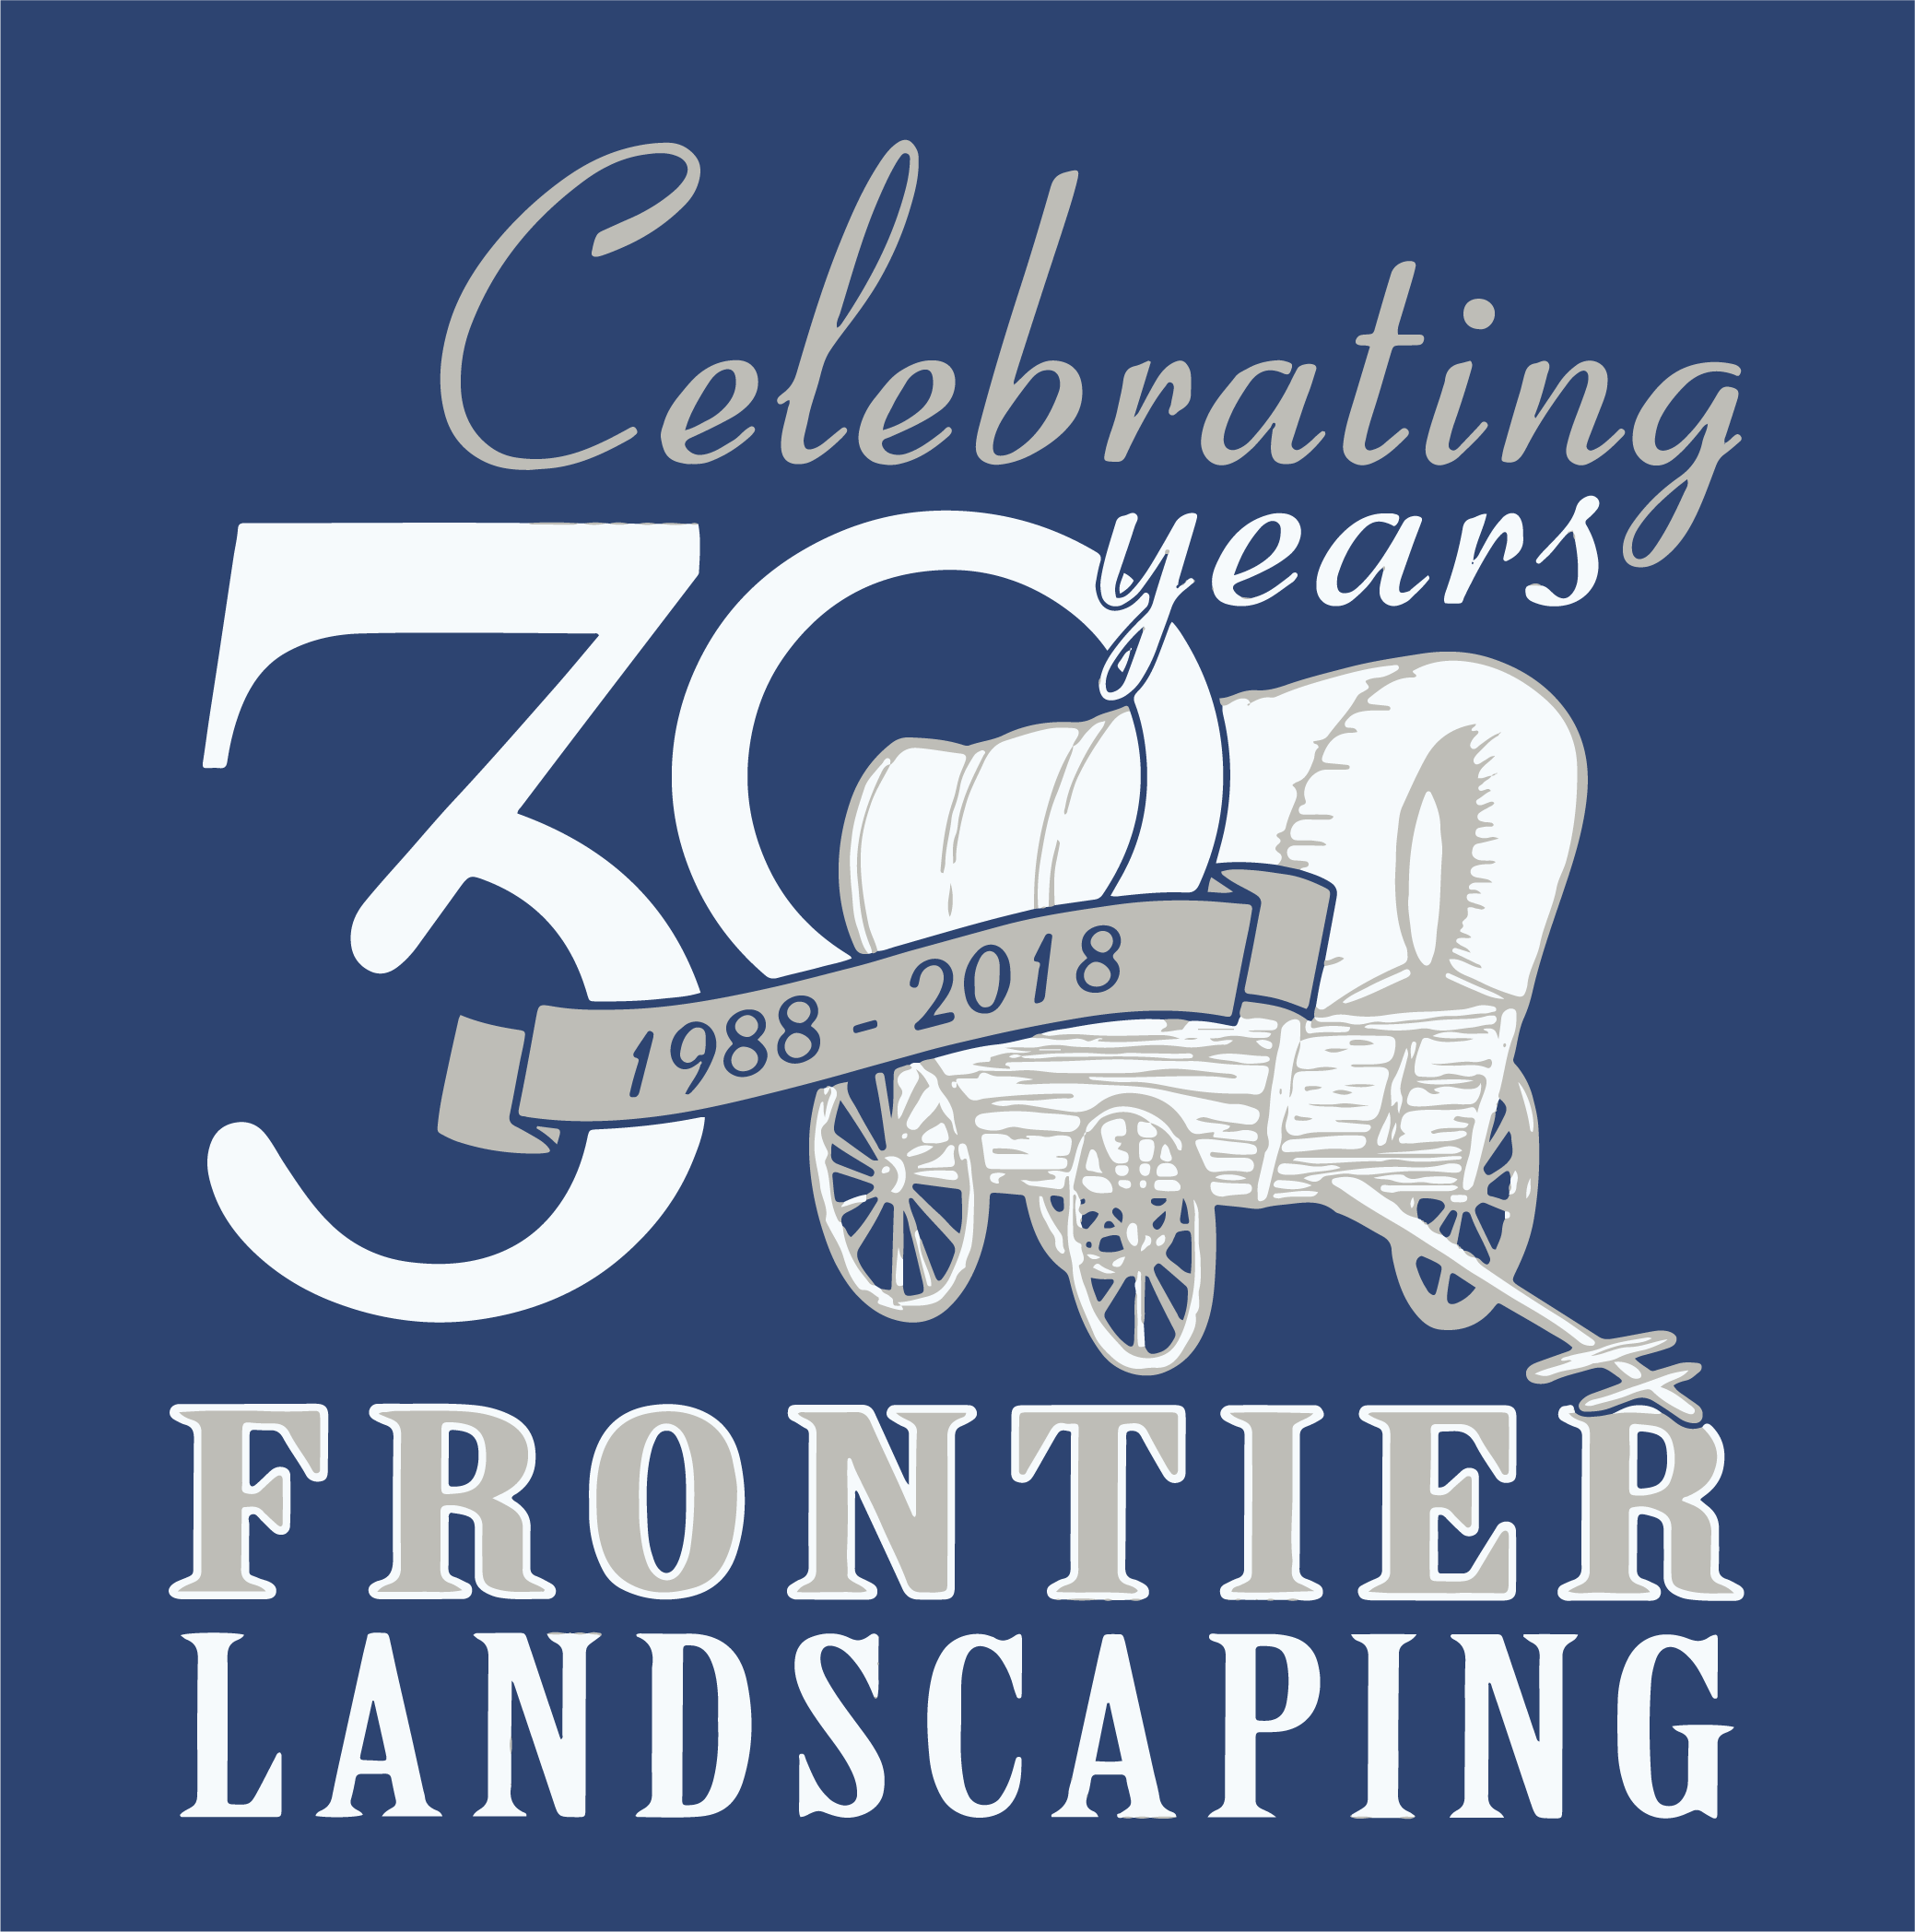 Frontier Landscaping, celebrating 30 years of landscape design and landscape maintenance.